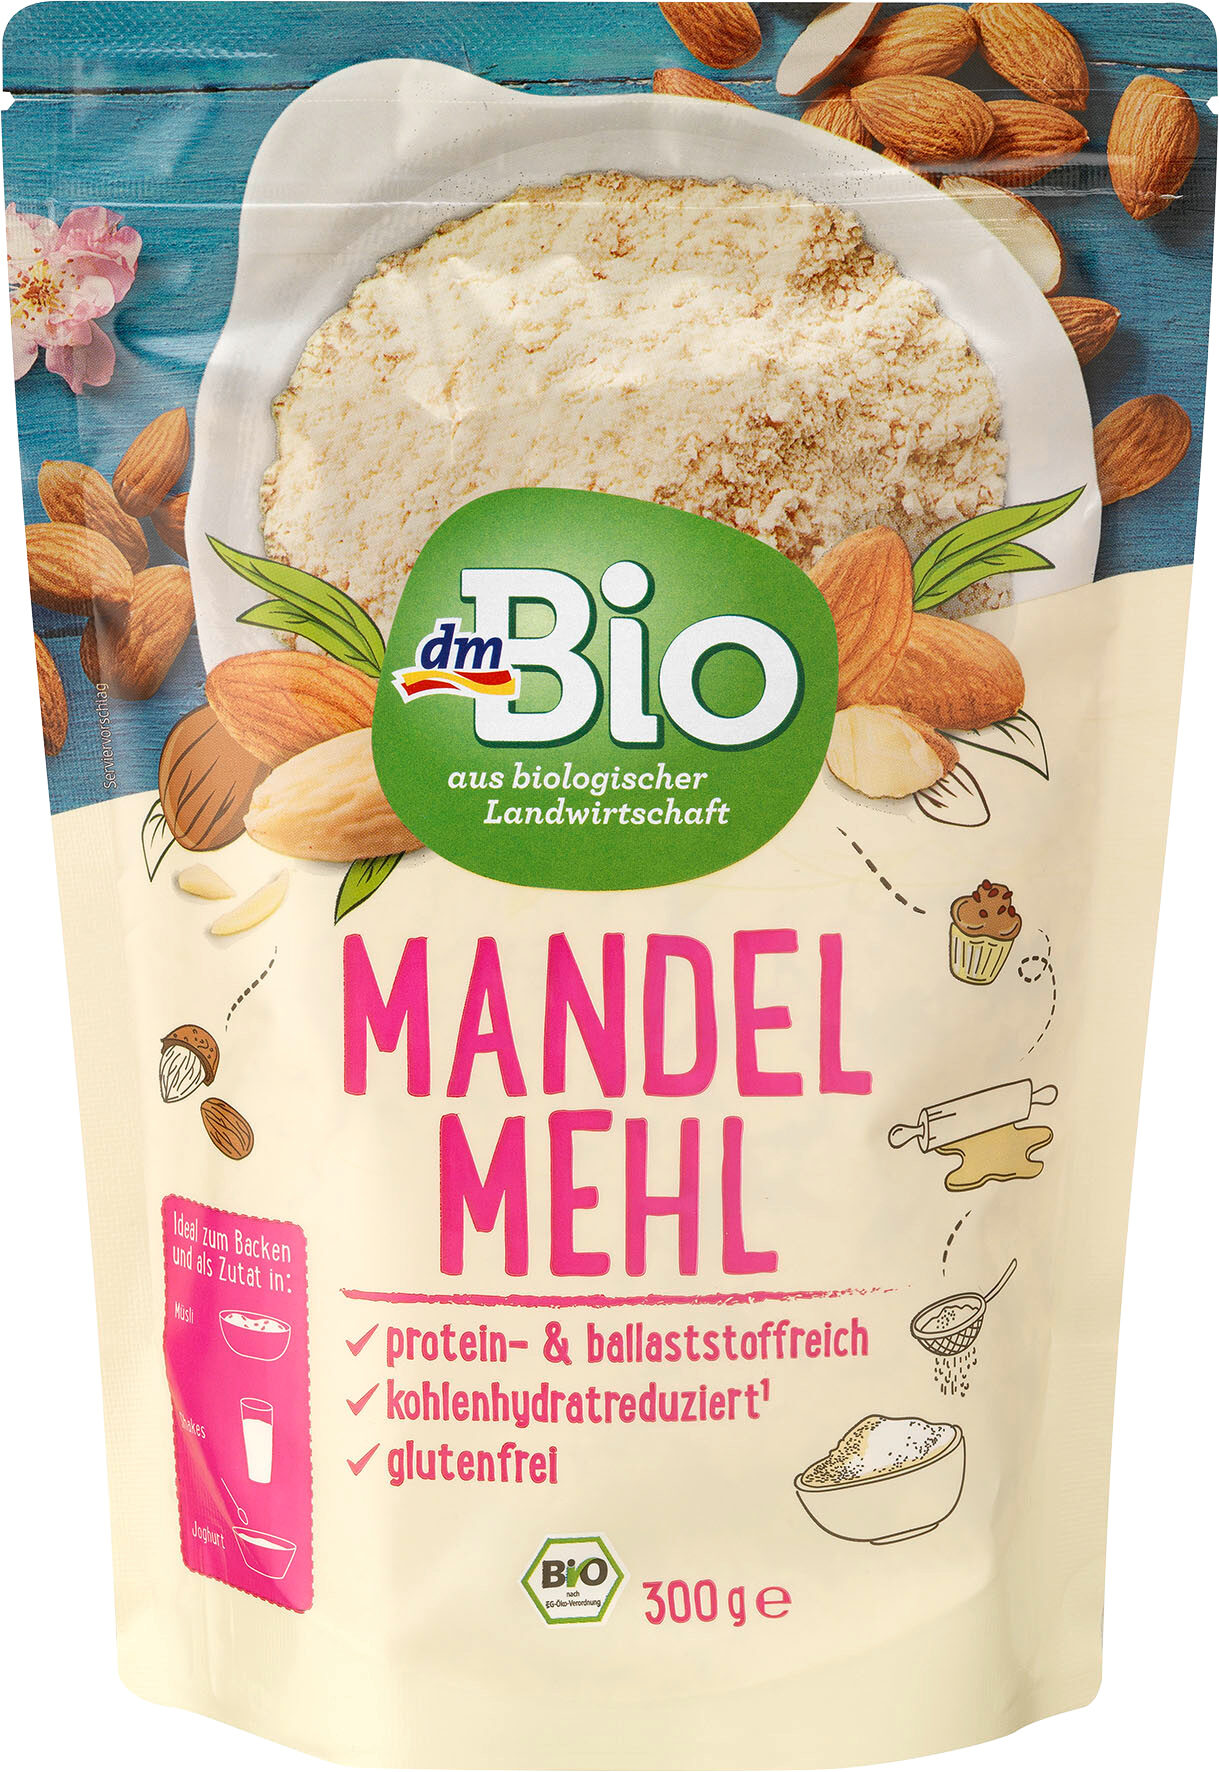 Brot - Mandelmehl - Produkt